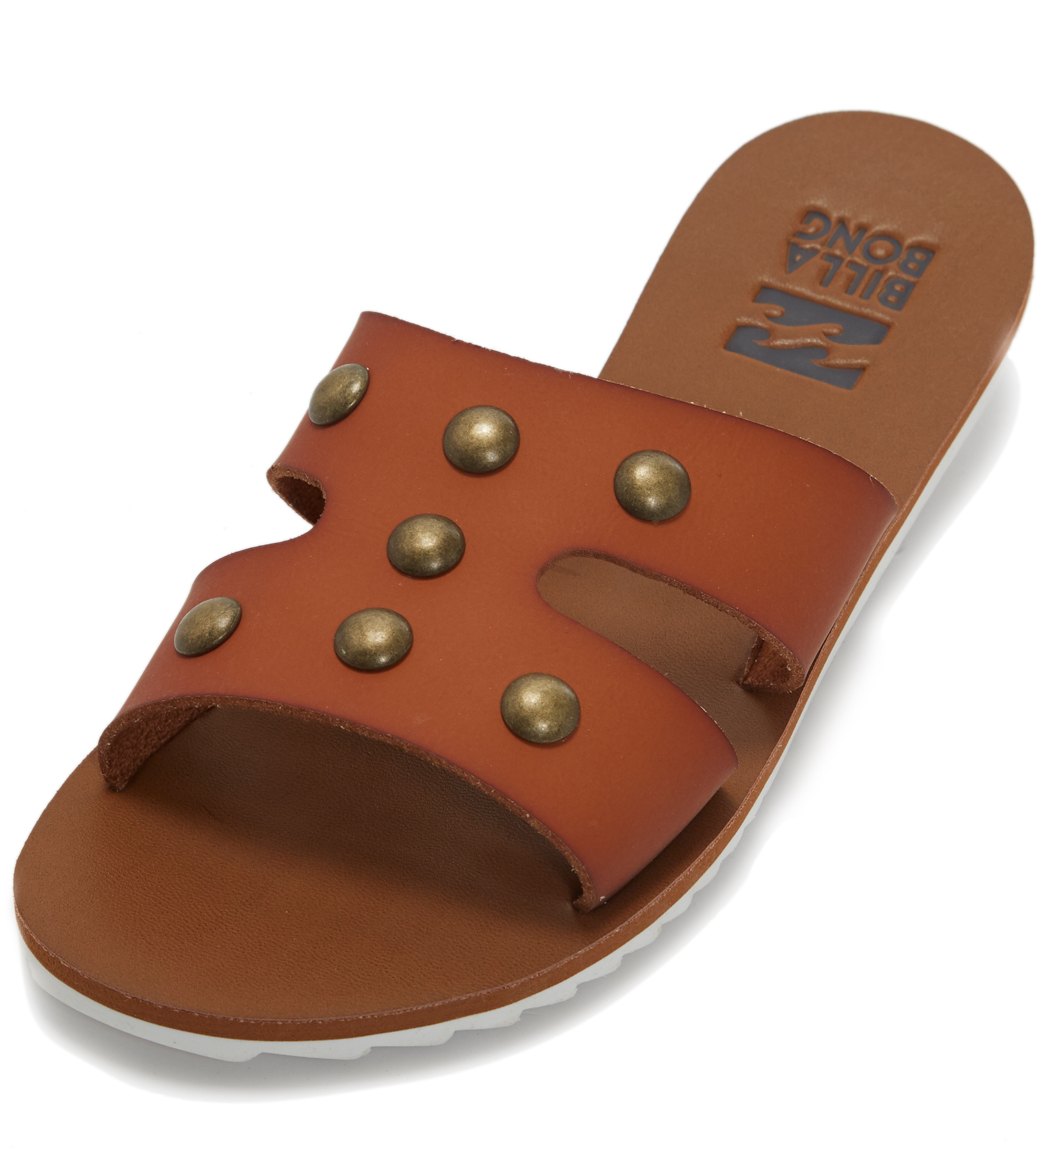 Billabong Studly Slides Sandals - Tan 10 - Swimoutlet.com